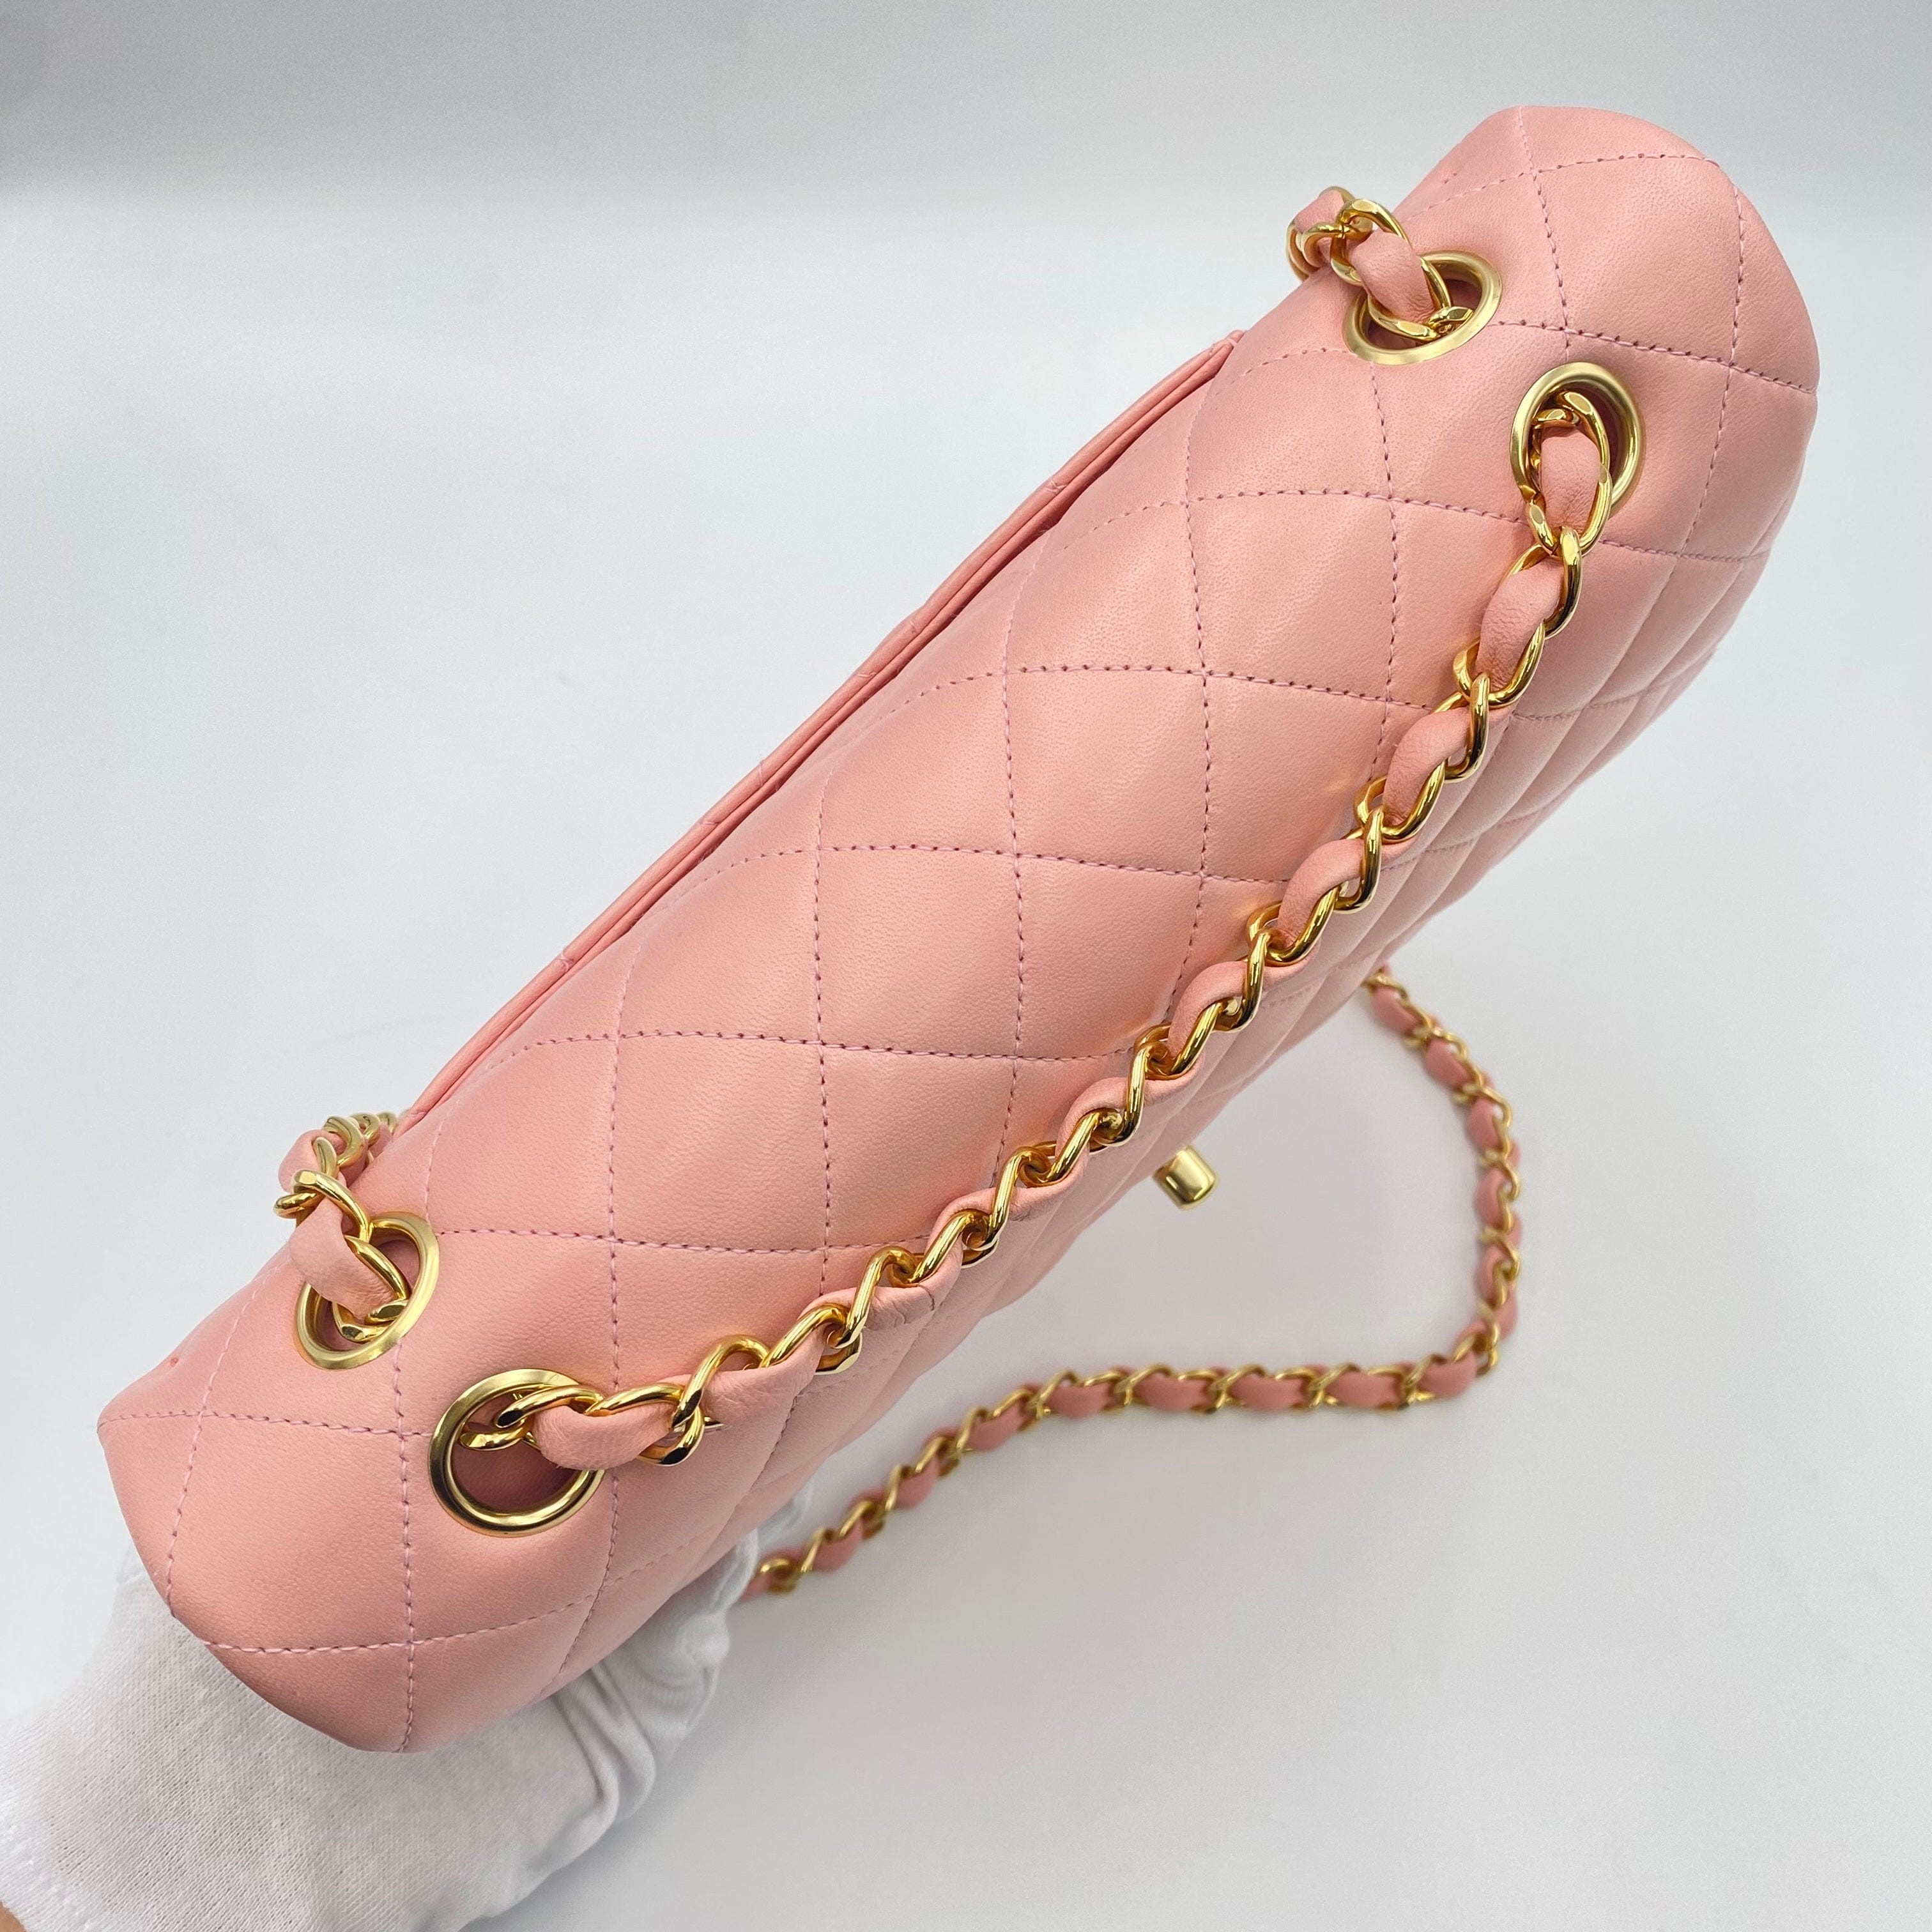 Chanel CHANEL VINTAGE CLASSIC FLAP MEDIUM CHAIN SHOULDER BAG PINK LAMB SKIN 90219906